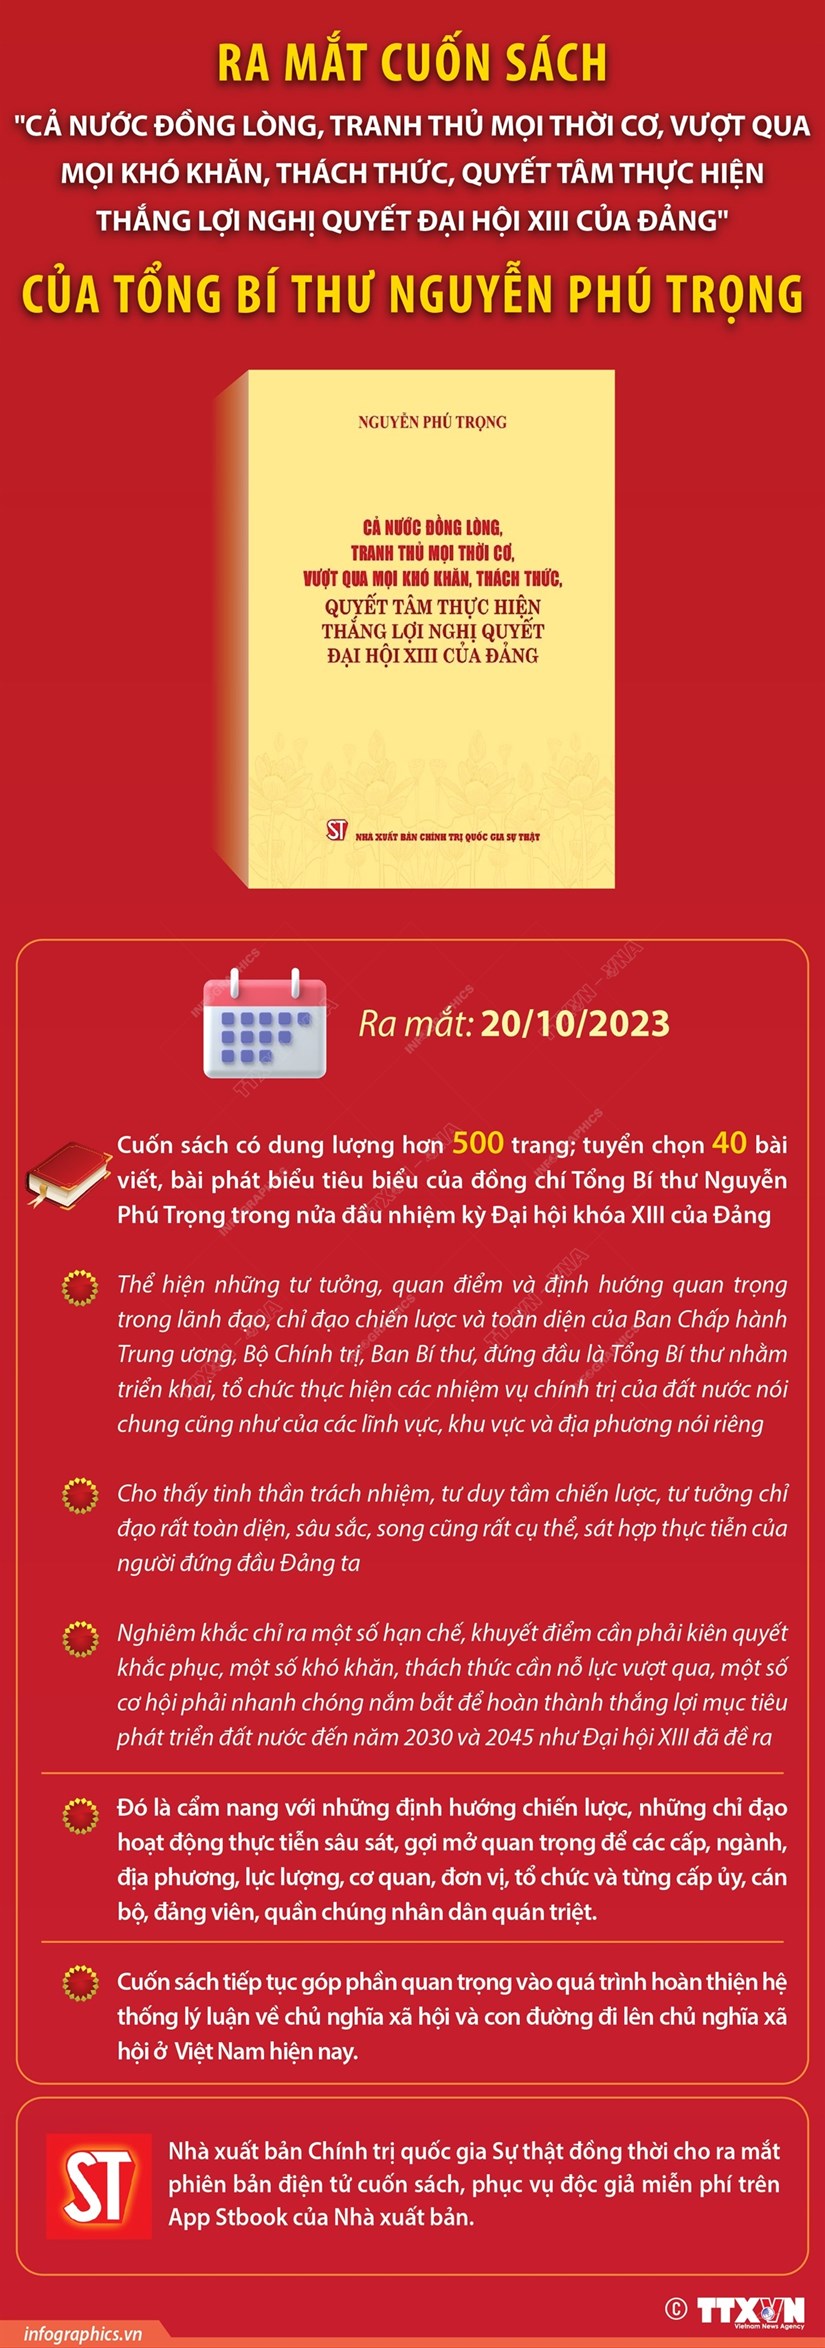 [Infographics] Ra mat cuon sach cua Tong Bi thu Nguyen Phu Trong hinh anh 1